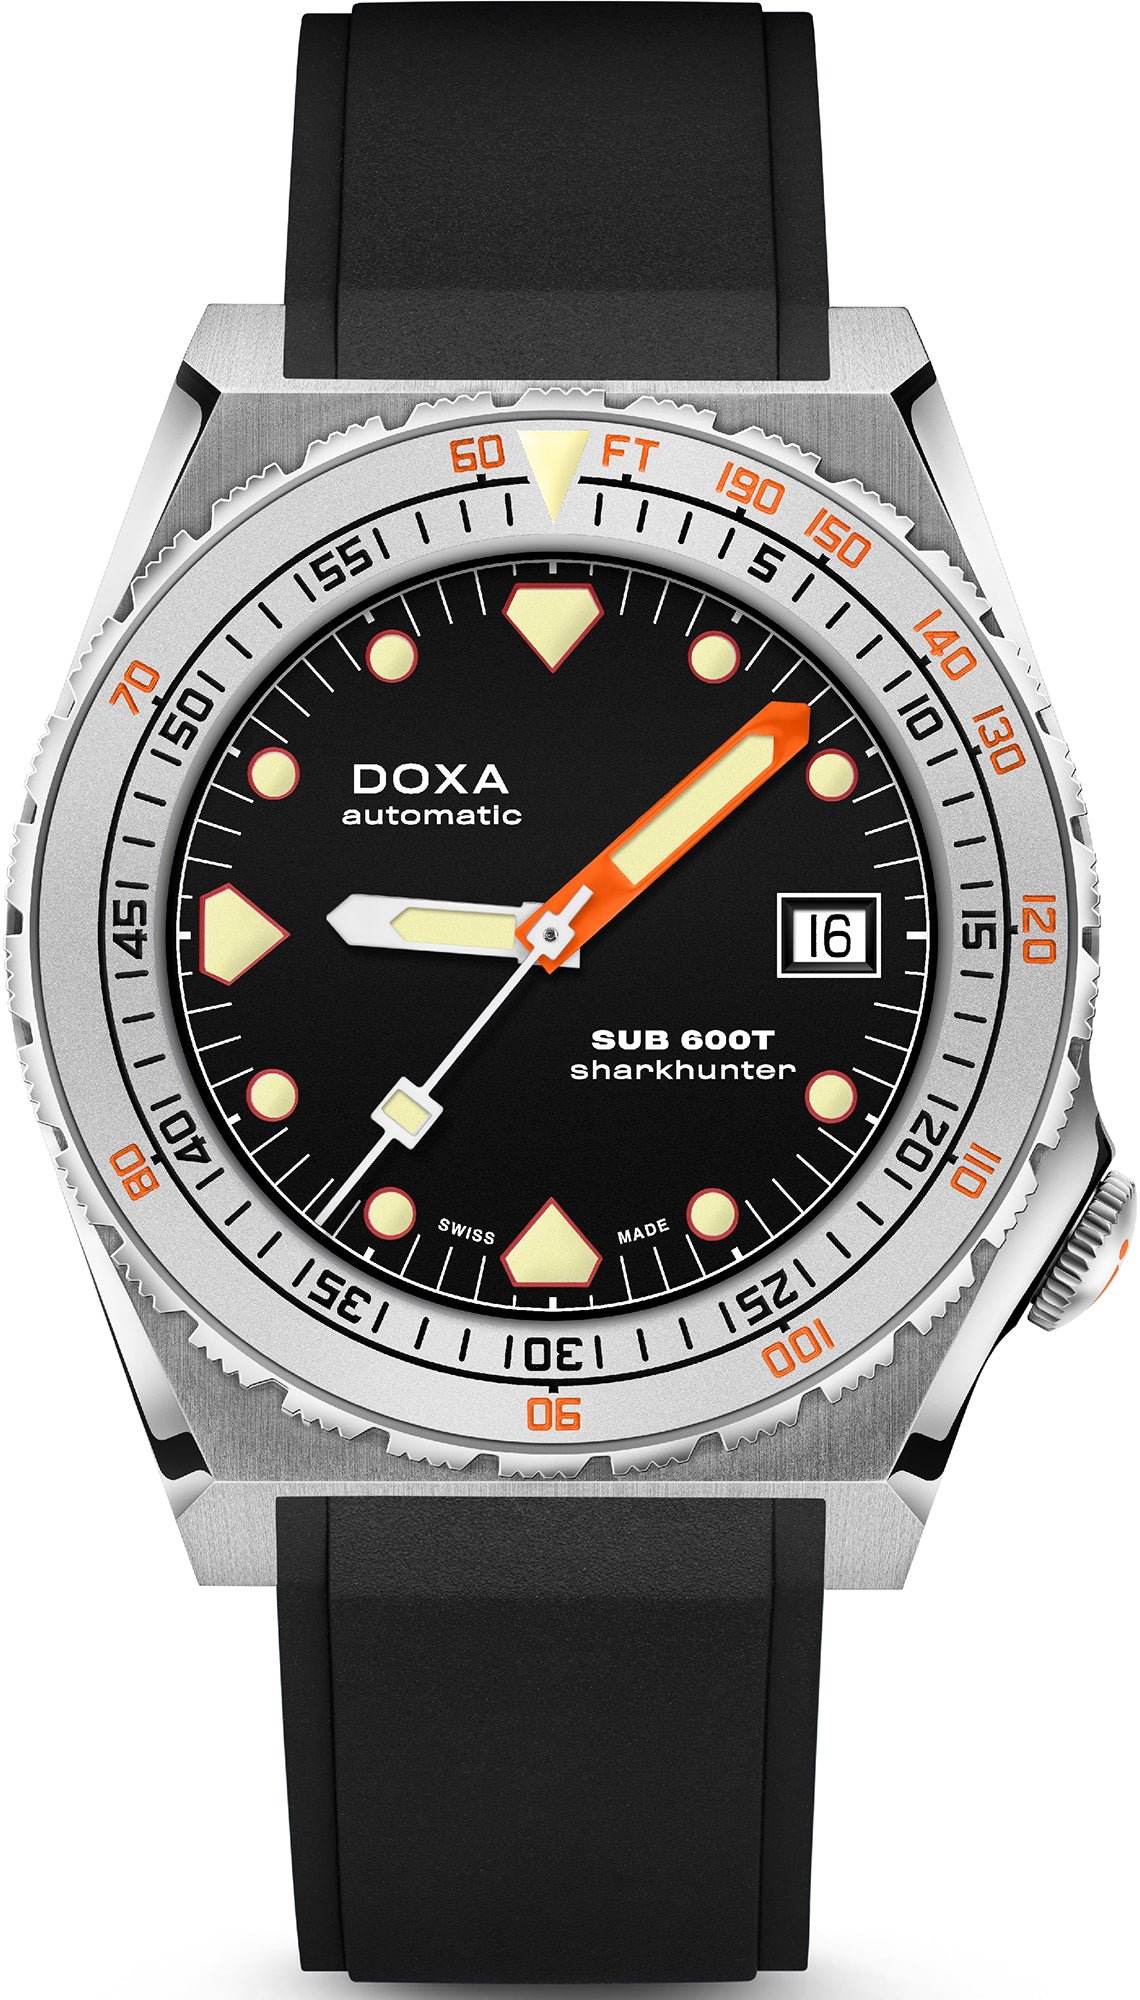 Photos - Wrist Watch DOXA Watch SUB 600T Sharkhunter Rubber DOX-122 